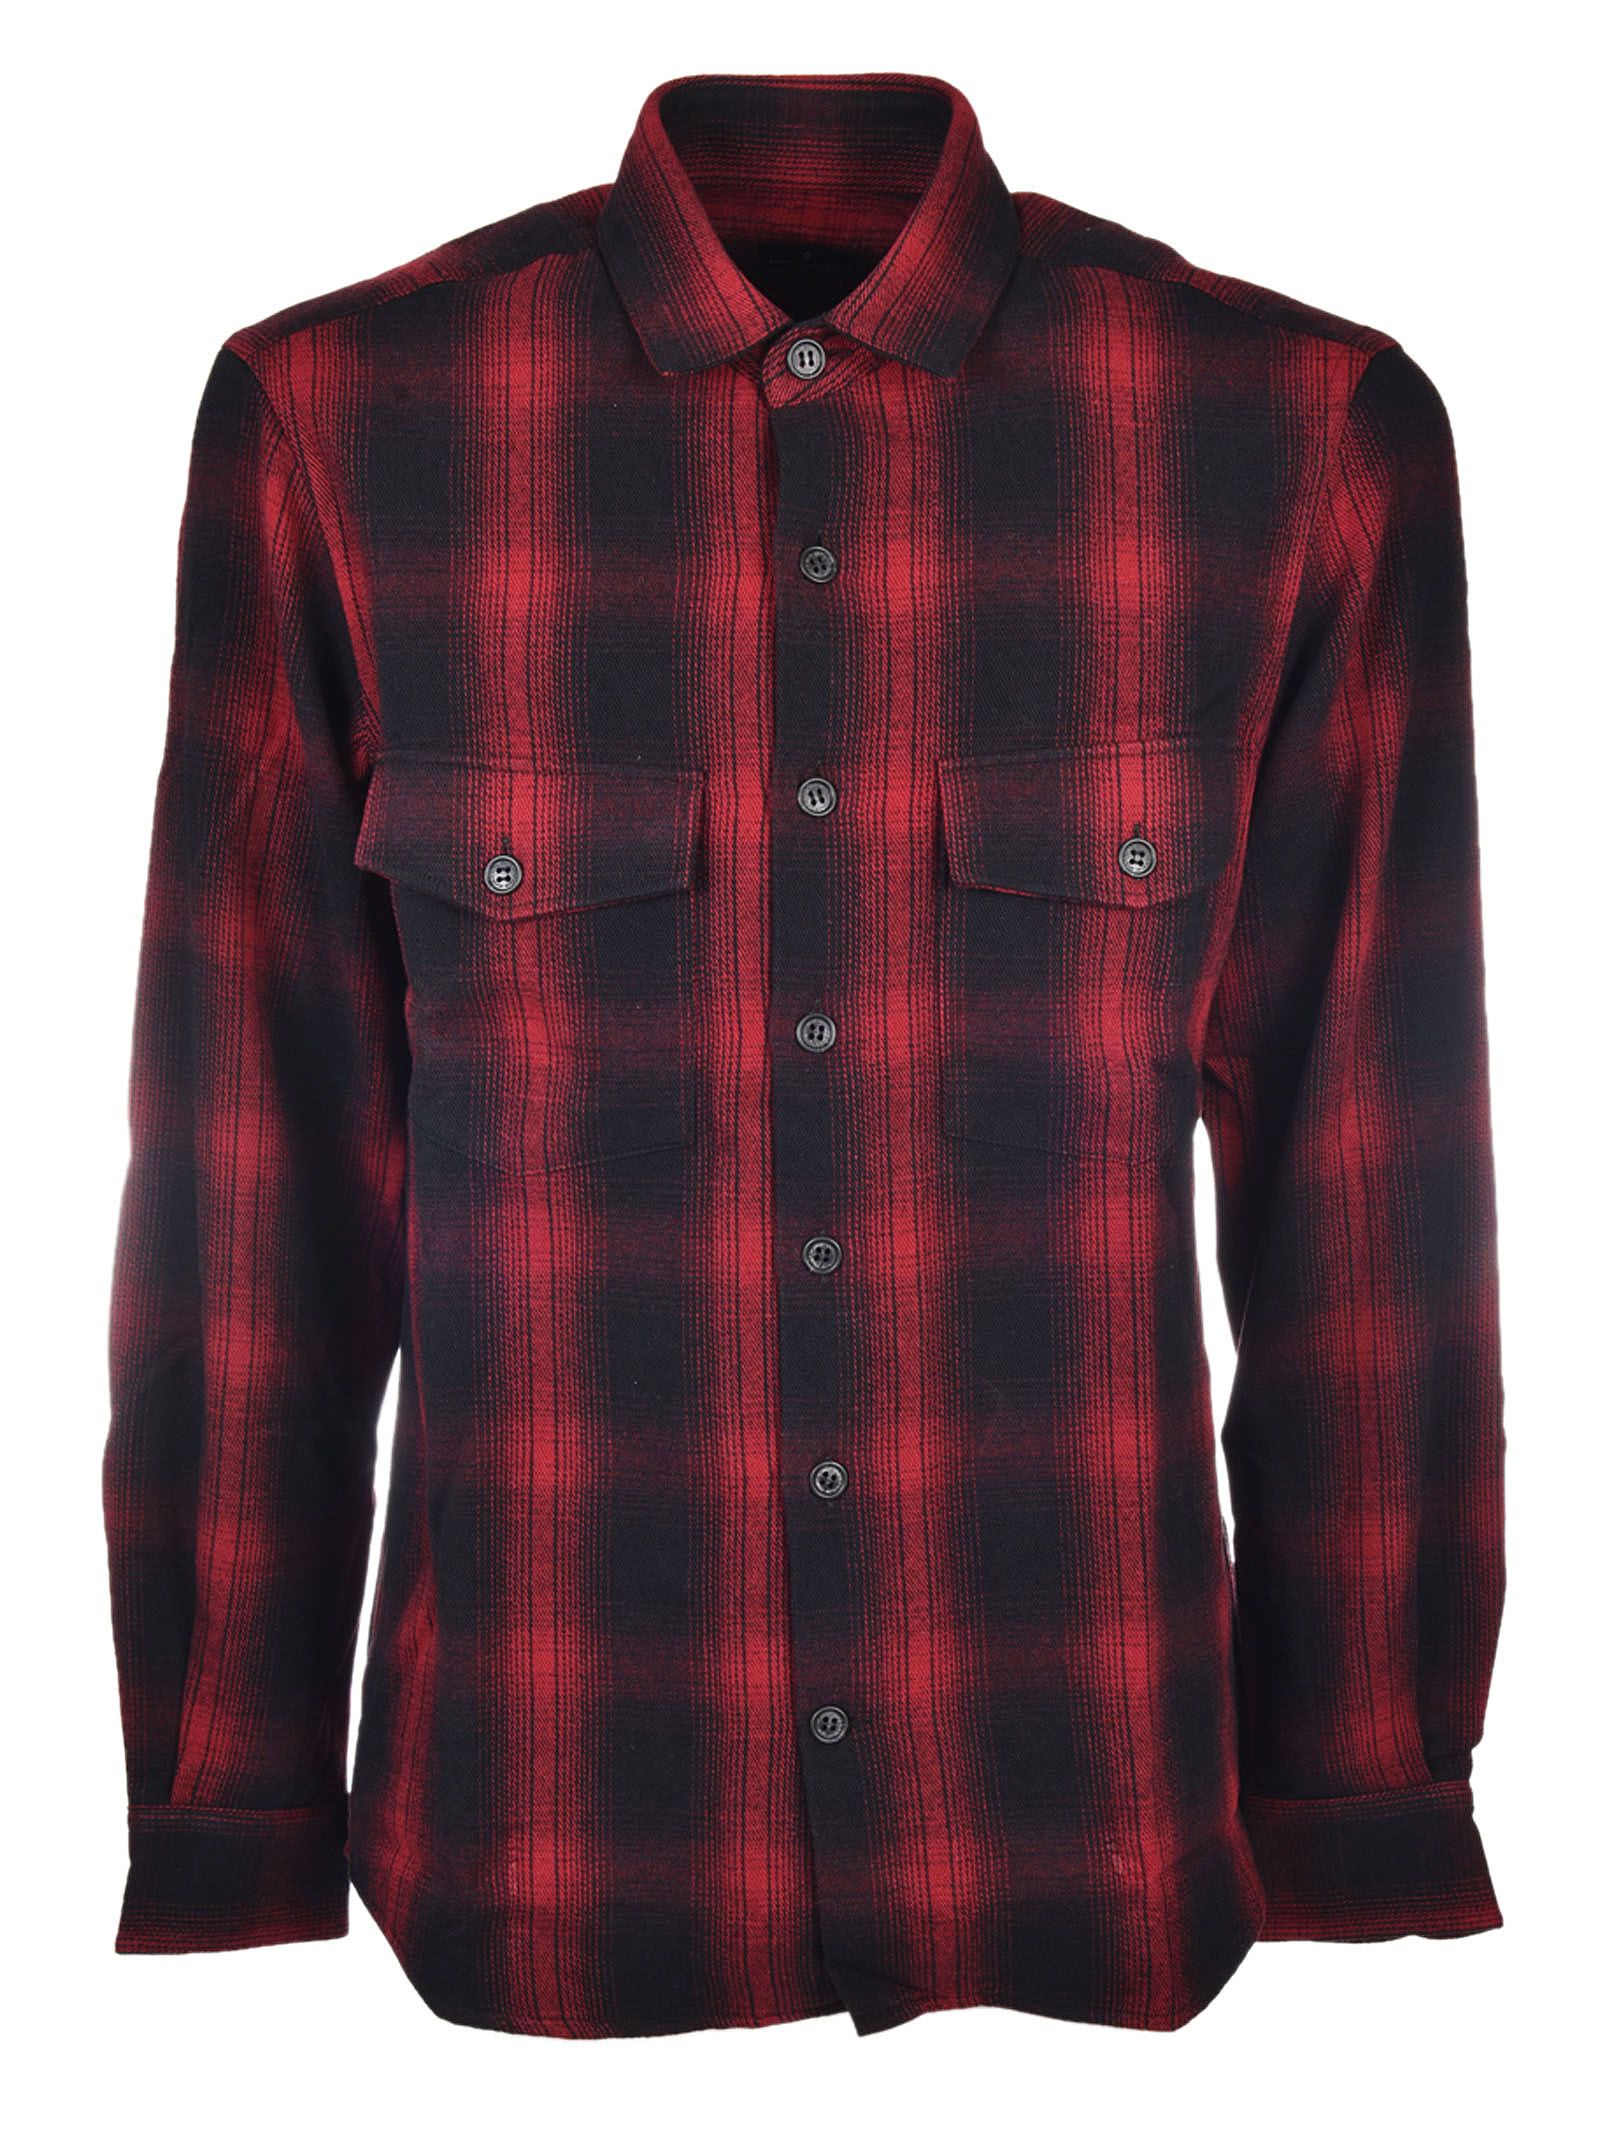 MARCELO BURLON COUNTY OF MILAN Iamens Check Flannel Shirt in Red Plaid ...